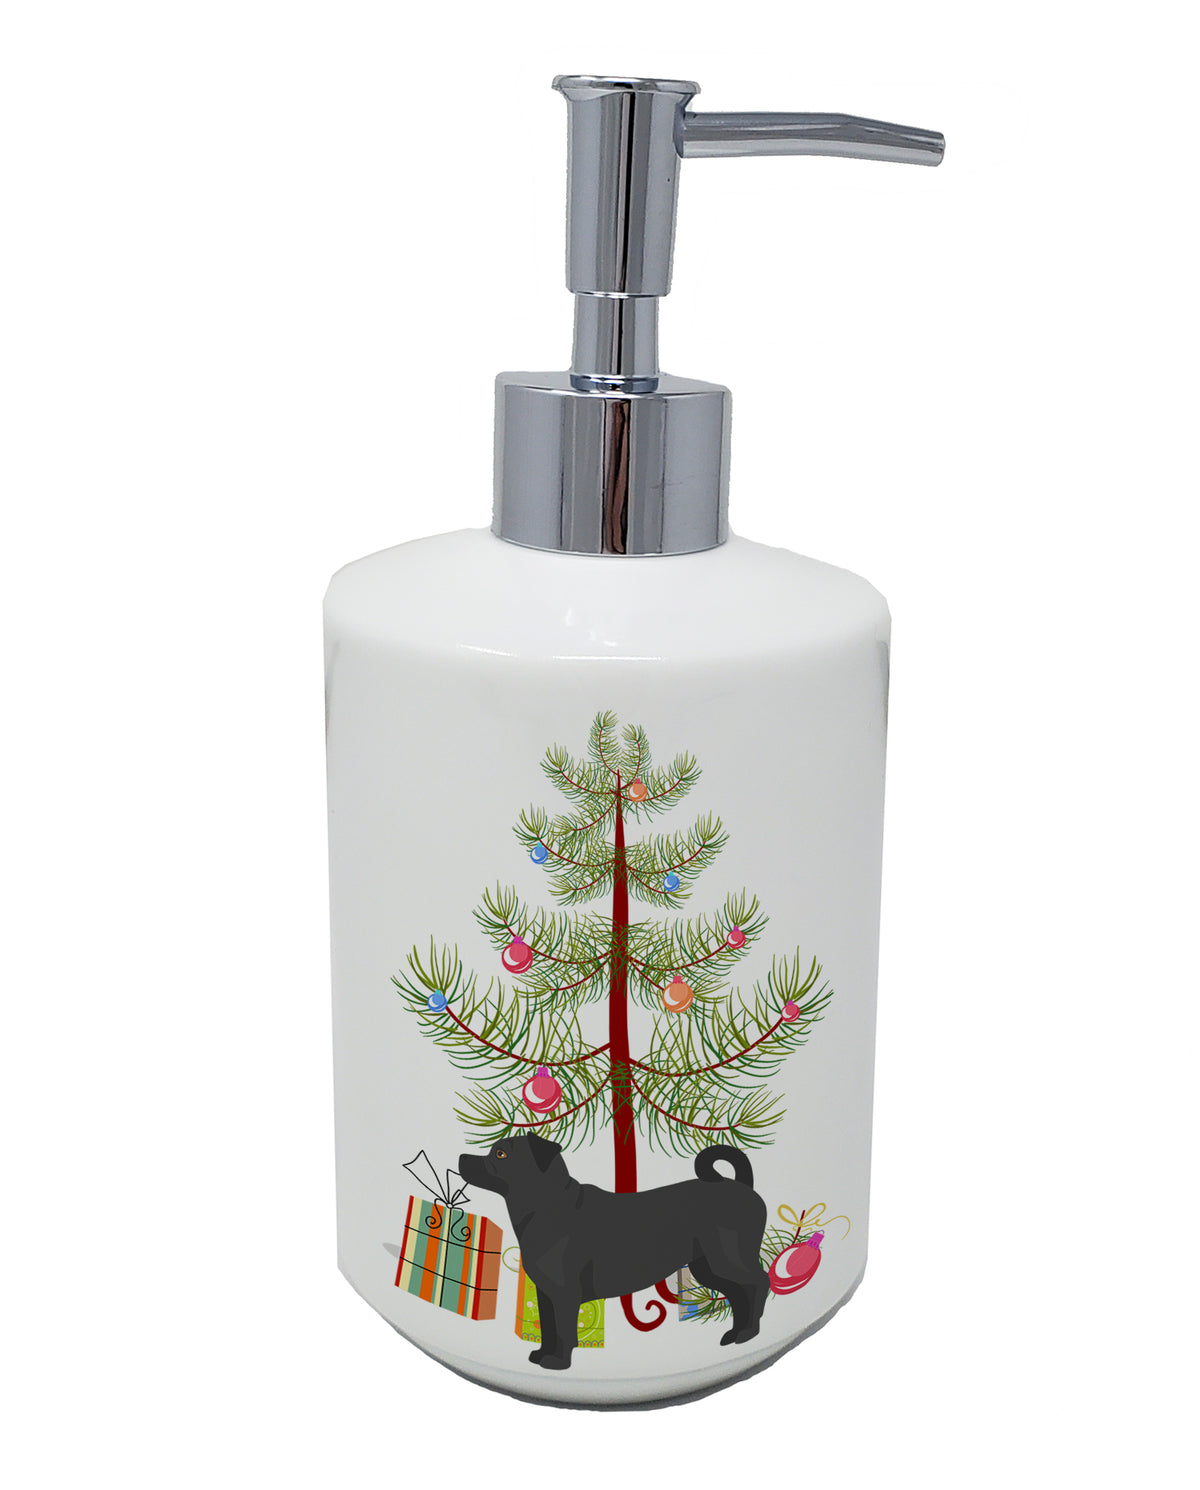 Buy this Balck Jug Christmas Tree Ceramic Soap Dispenser